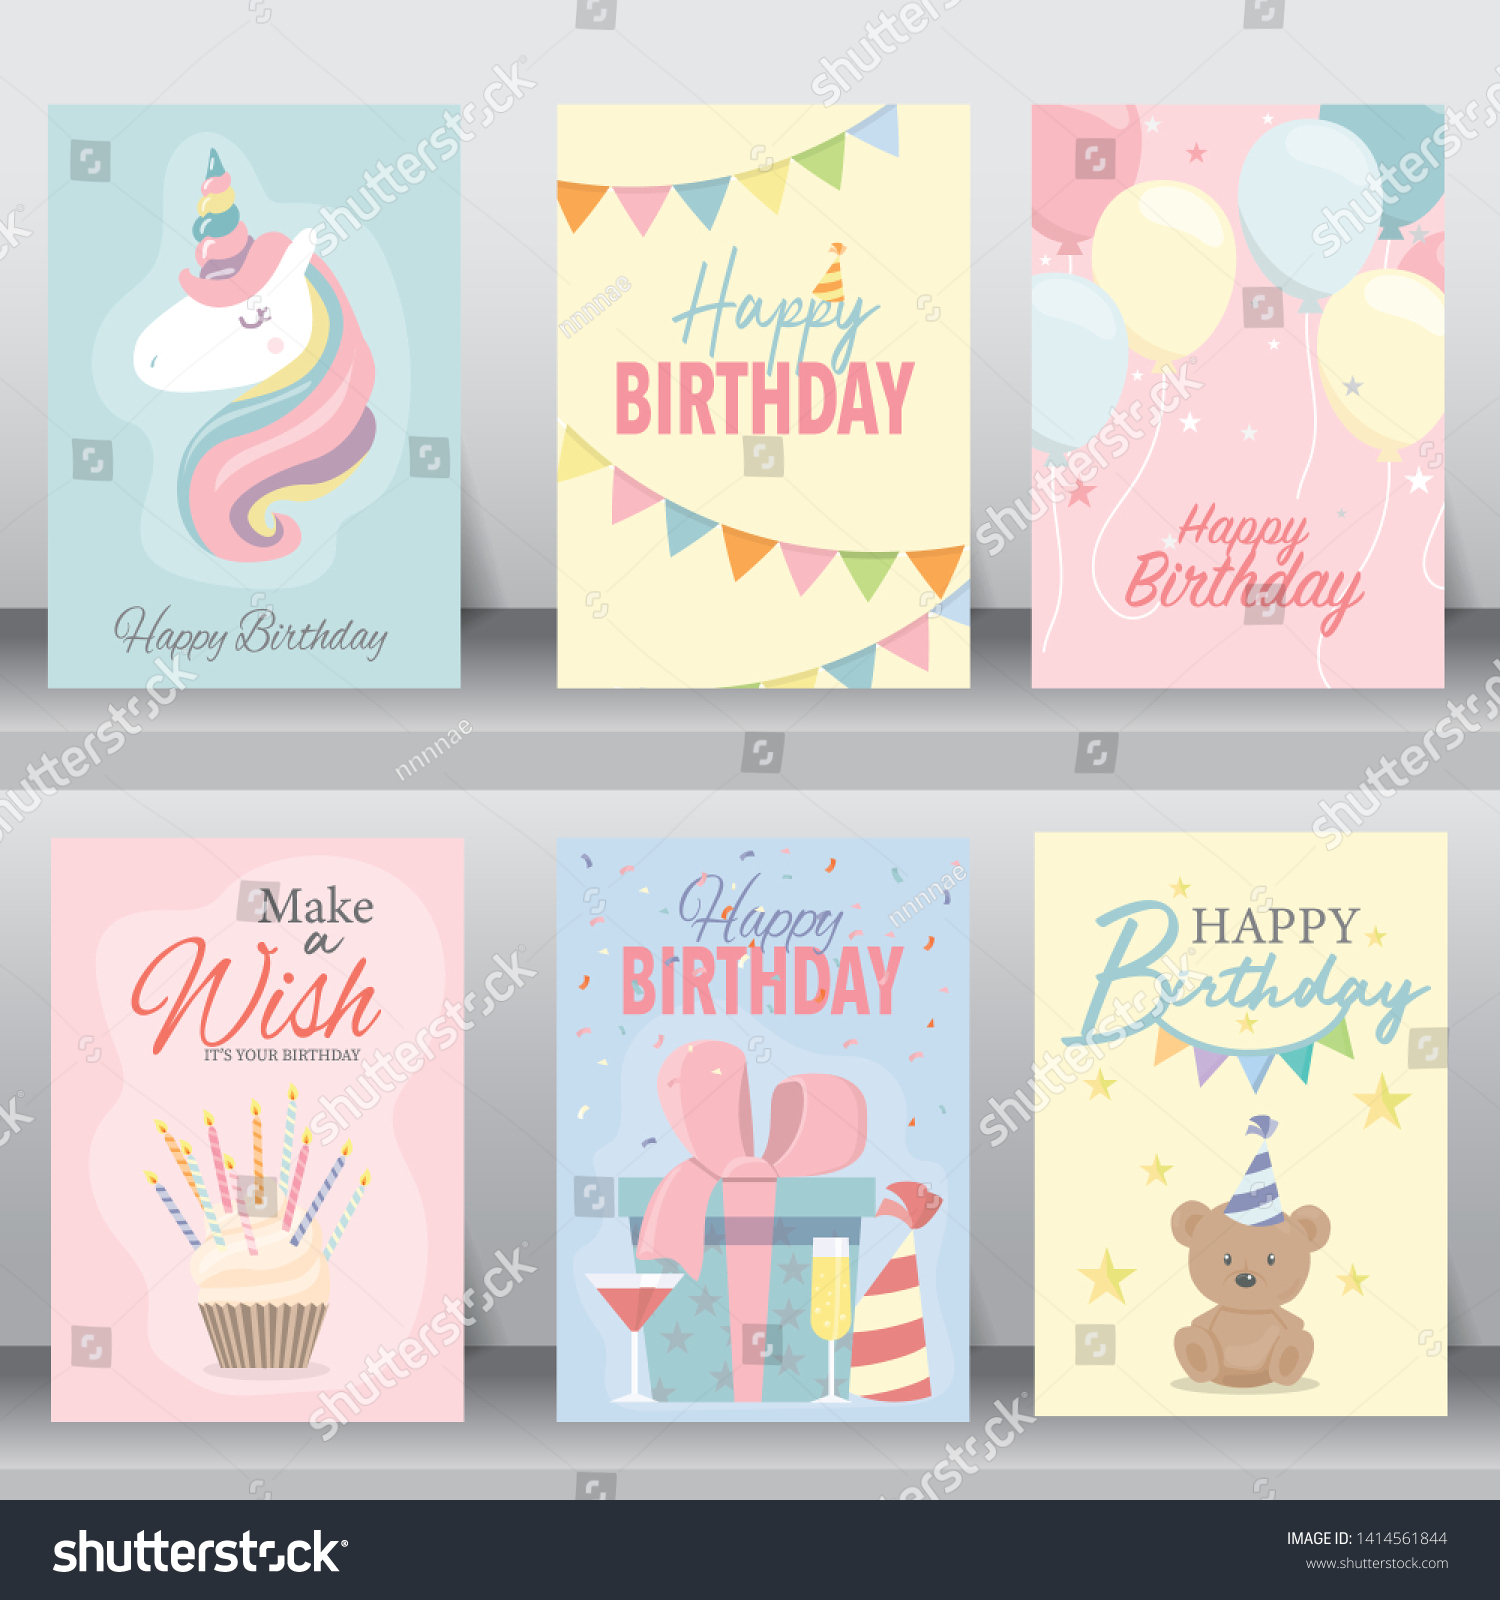 Happy Birthday Card Greeting Vitation Cards Stock Vector (Royalty Free ...